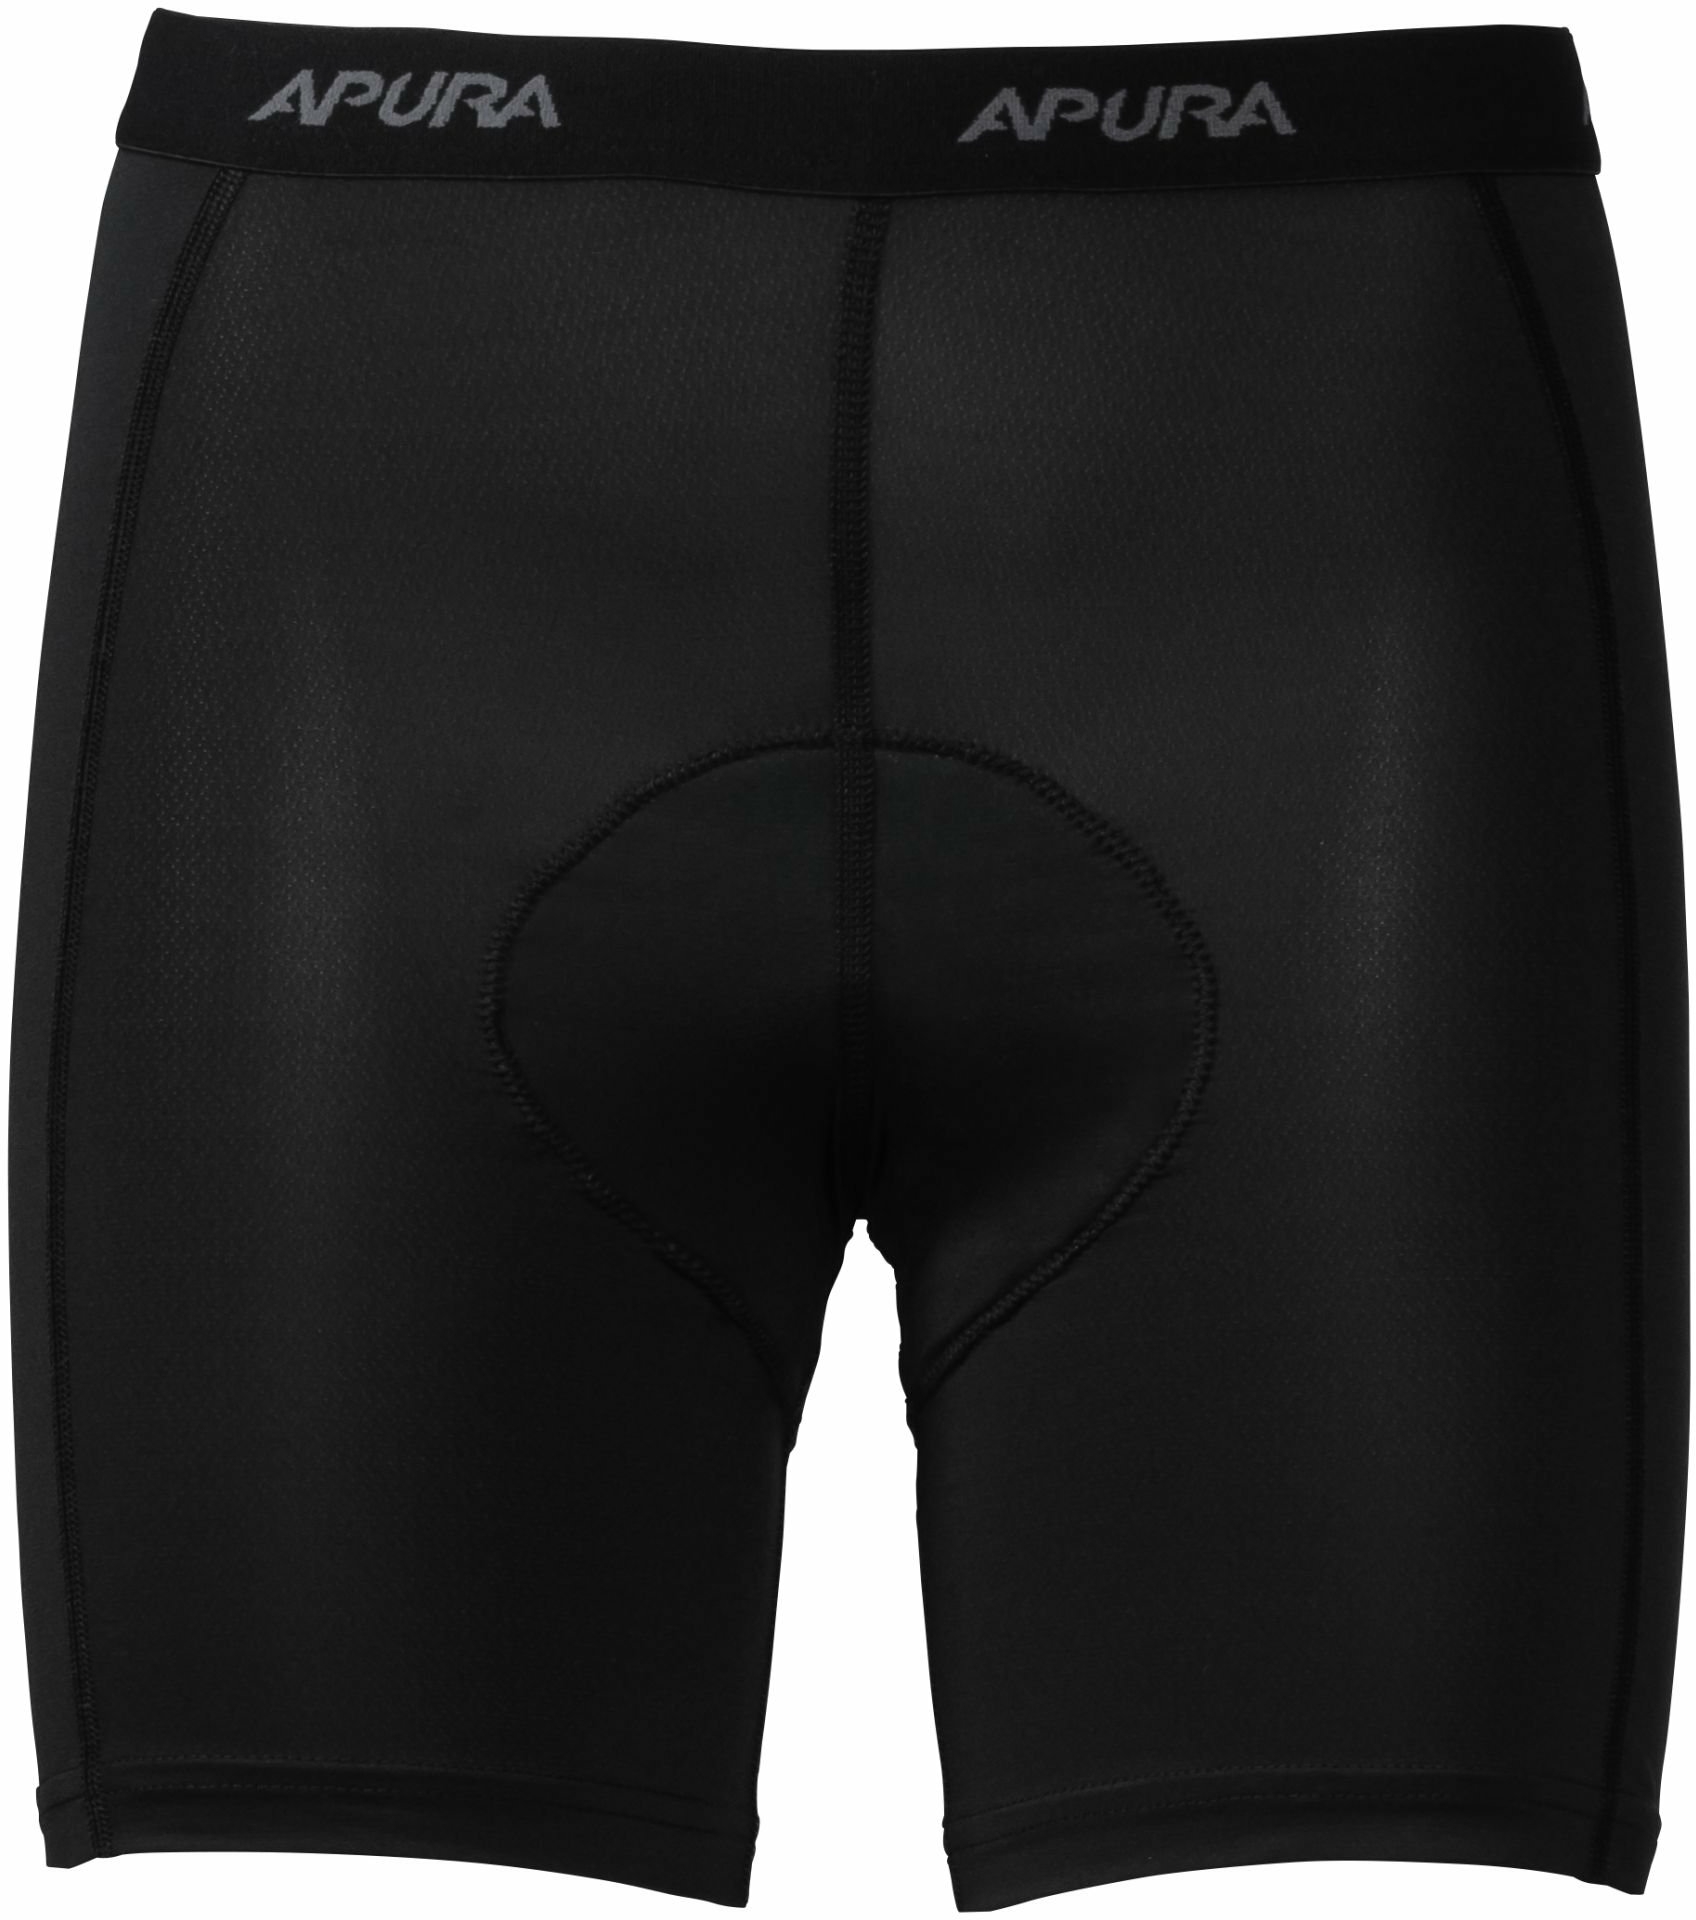 Bekleidung/Unterwäsche: Apura  Damen Unterhose Baselayer Short Pro Comfort S 